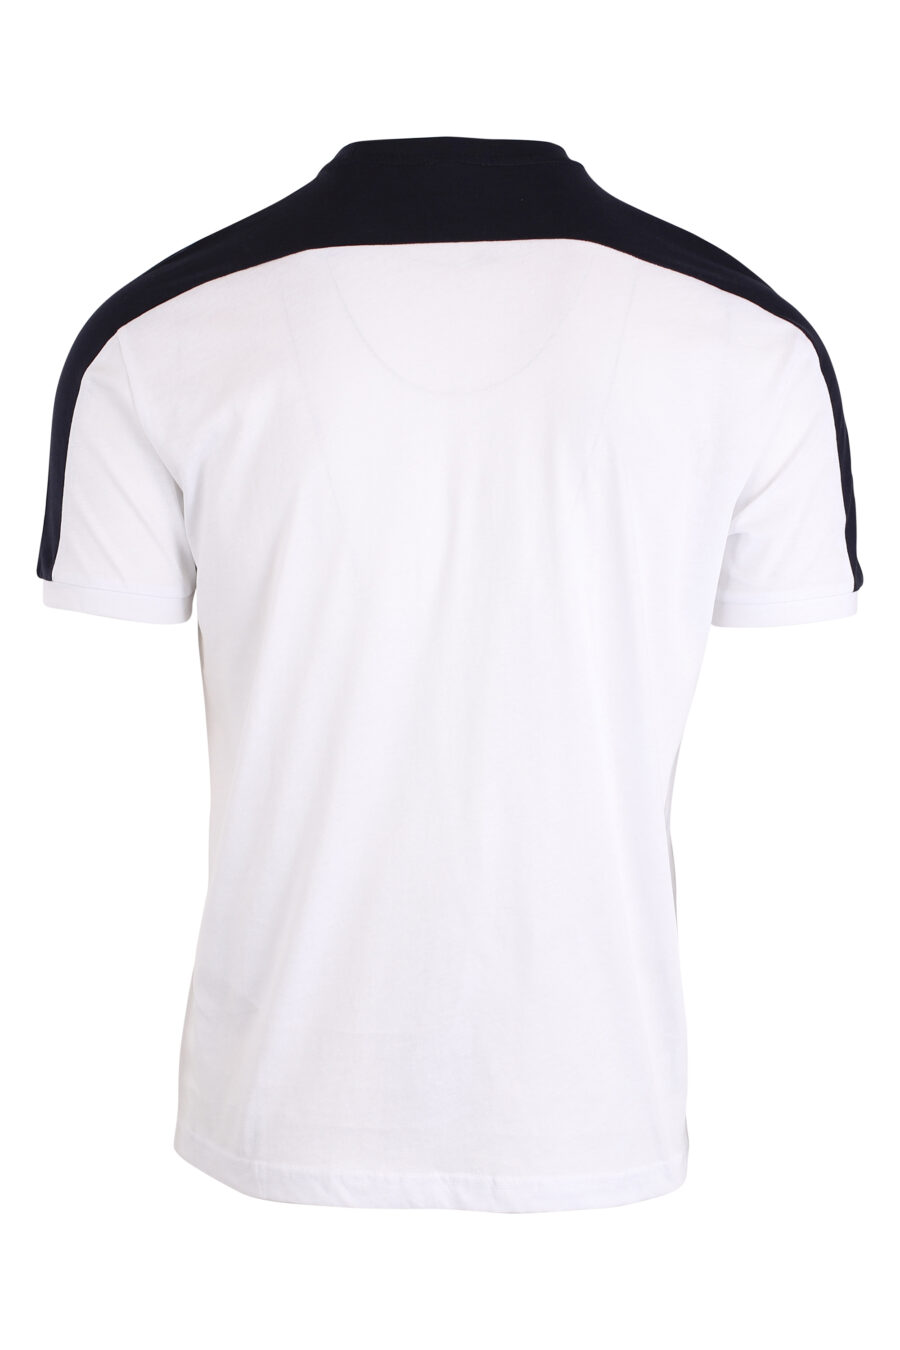 Two-colour white T-shirt and maxilogo "lux identity" - IMG 4199